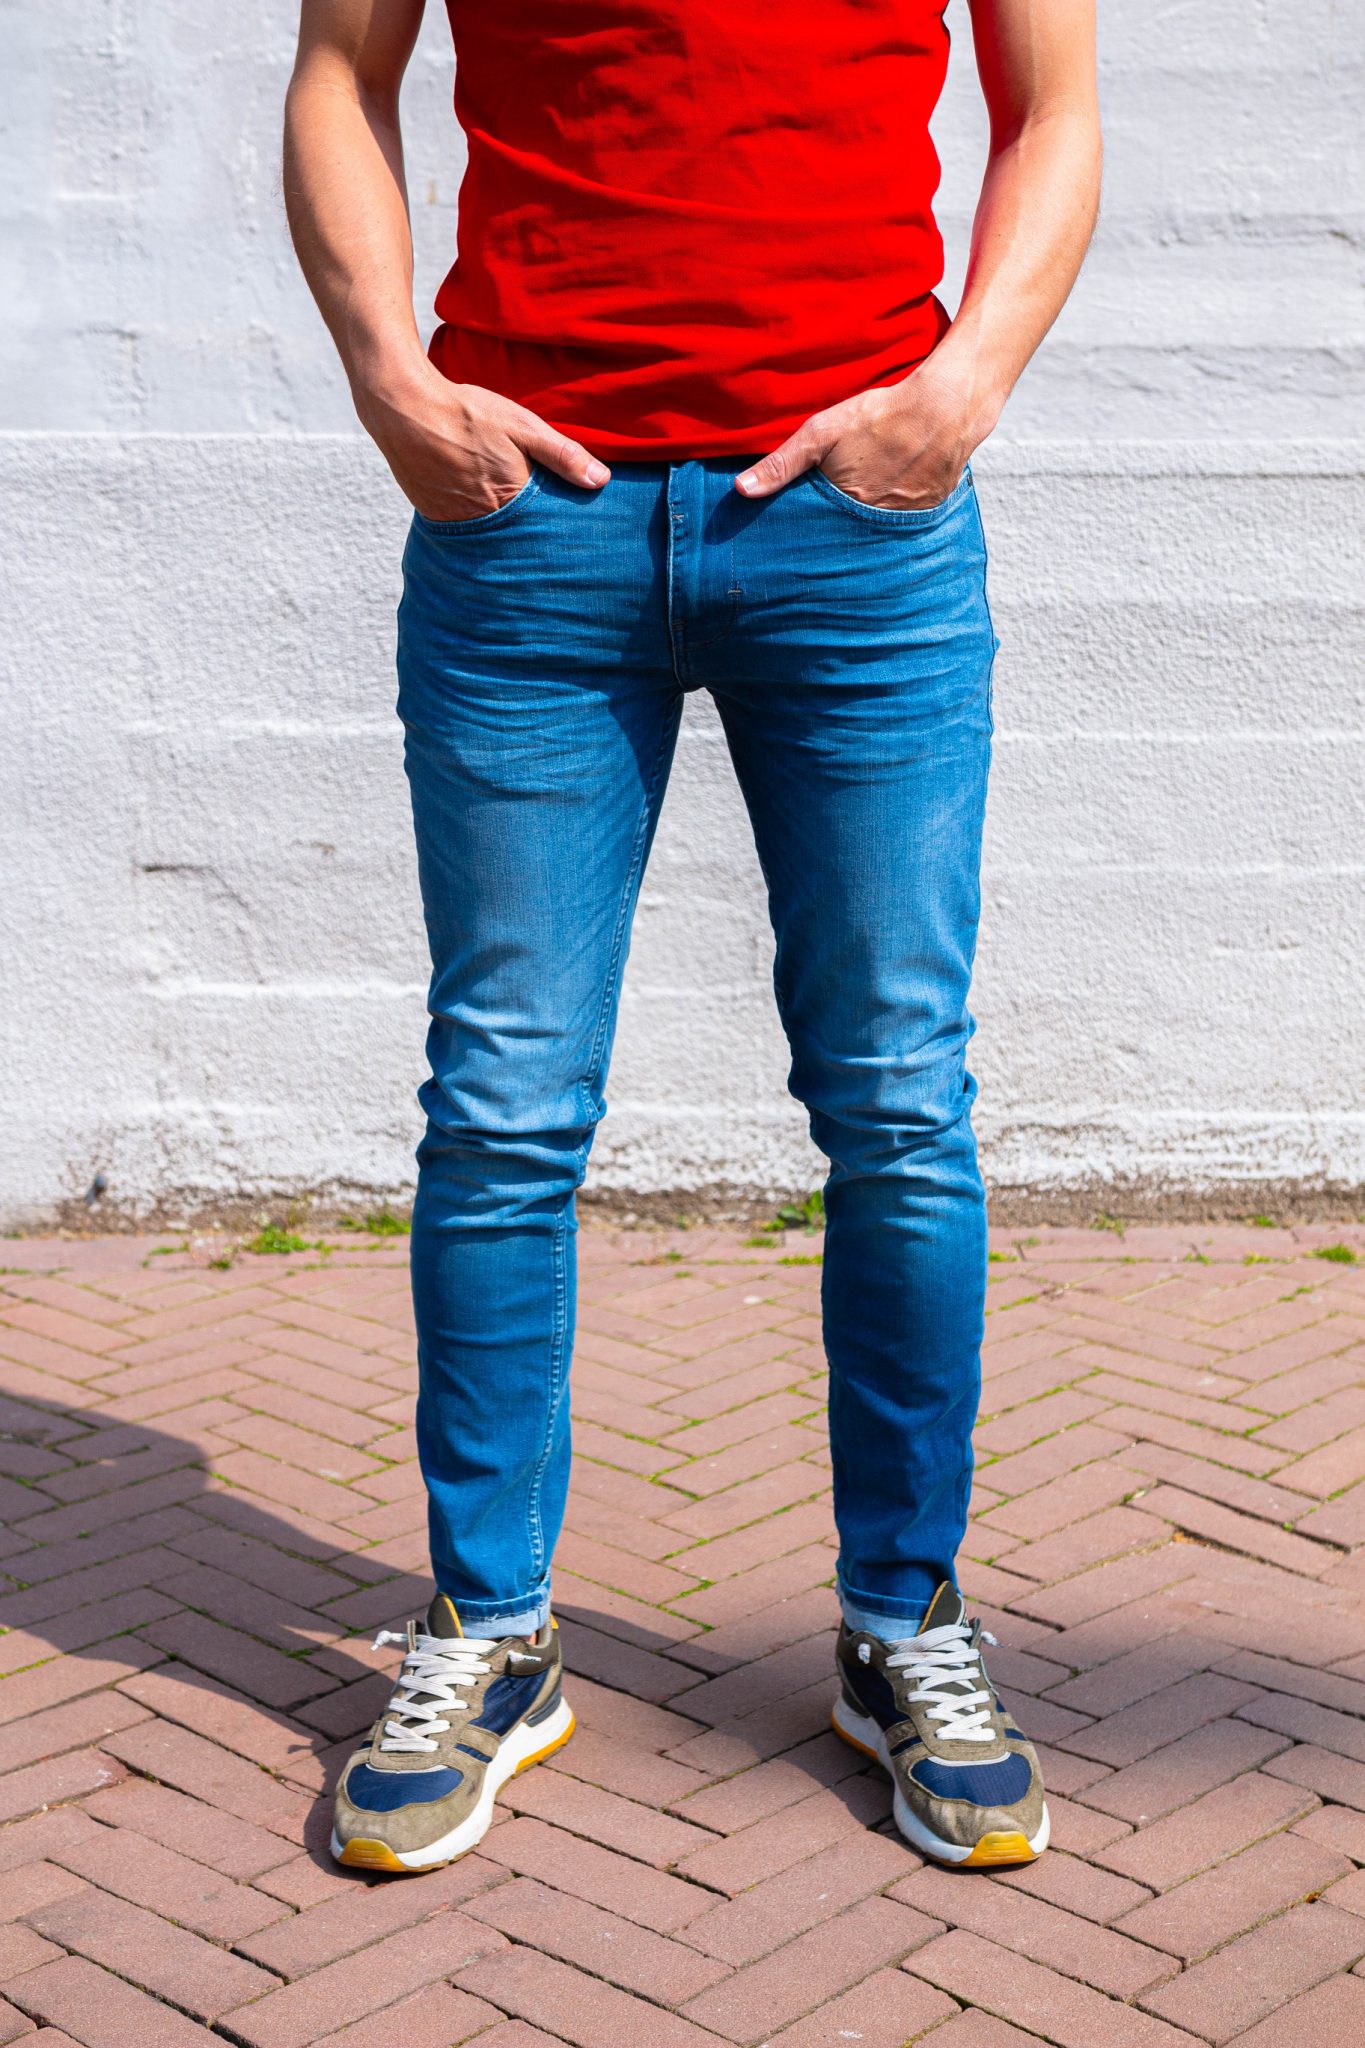 zwaard toespraak Uil Super Stretch Jeans Lichtblauw, Slim Fit, Zeer Comfortabel! - Outfit-s.nl